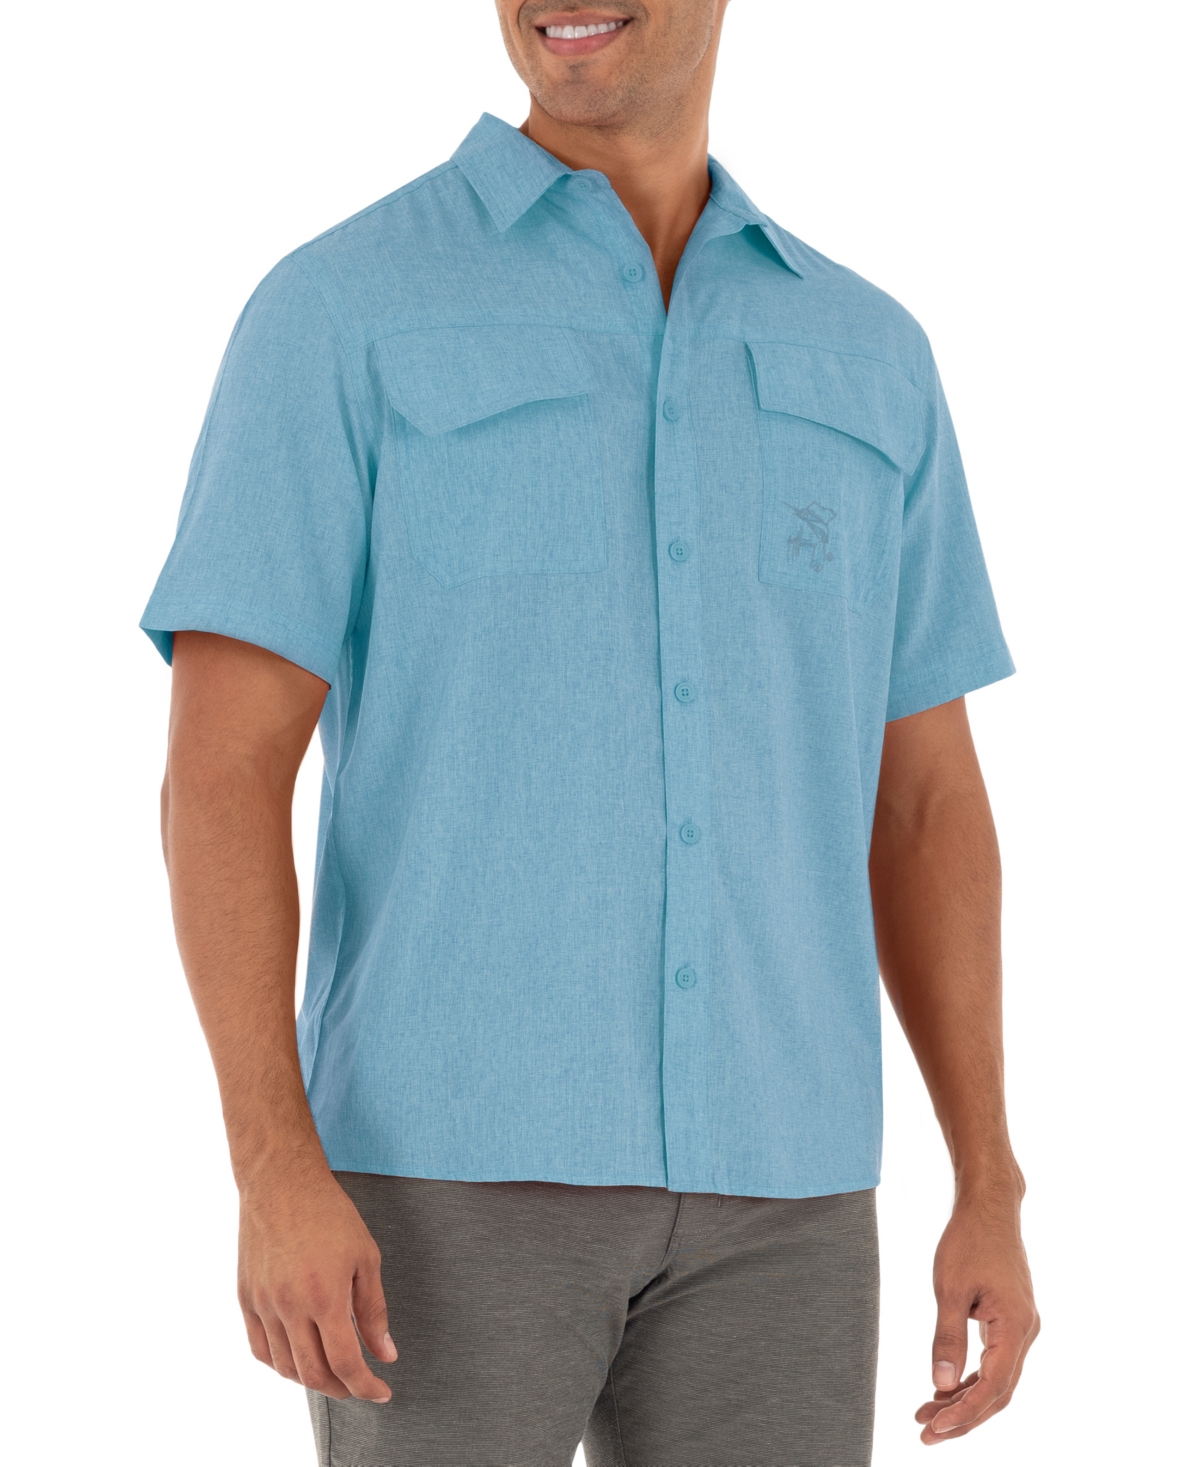 Men's Short Sleeve Heathered Fishing Shirt - Estate Blue